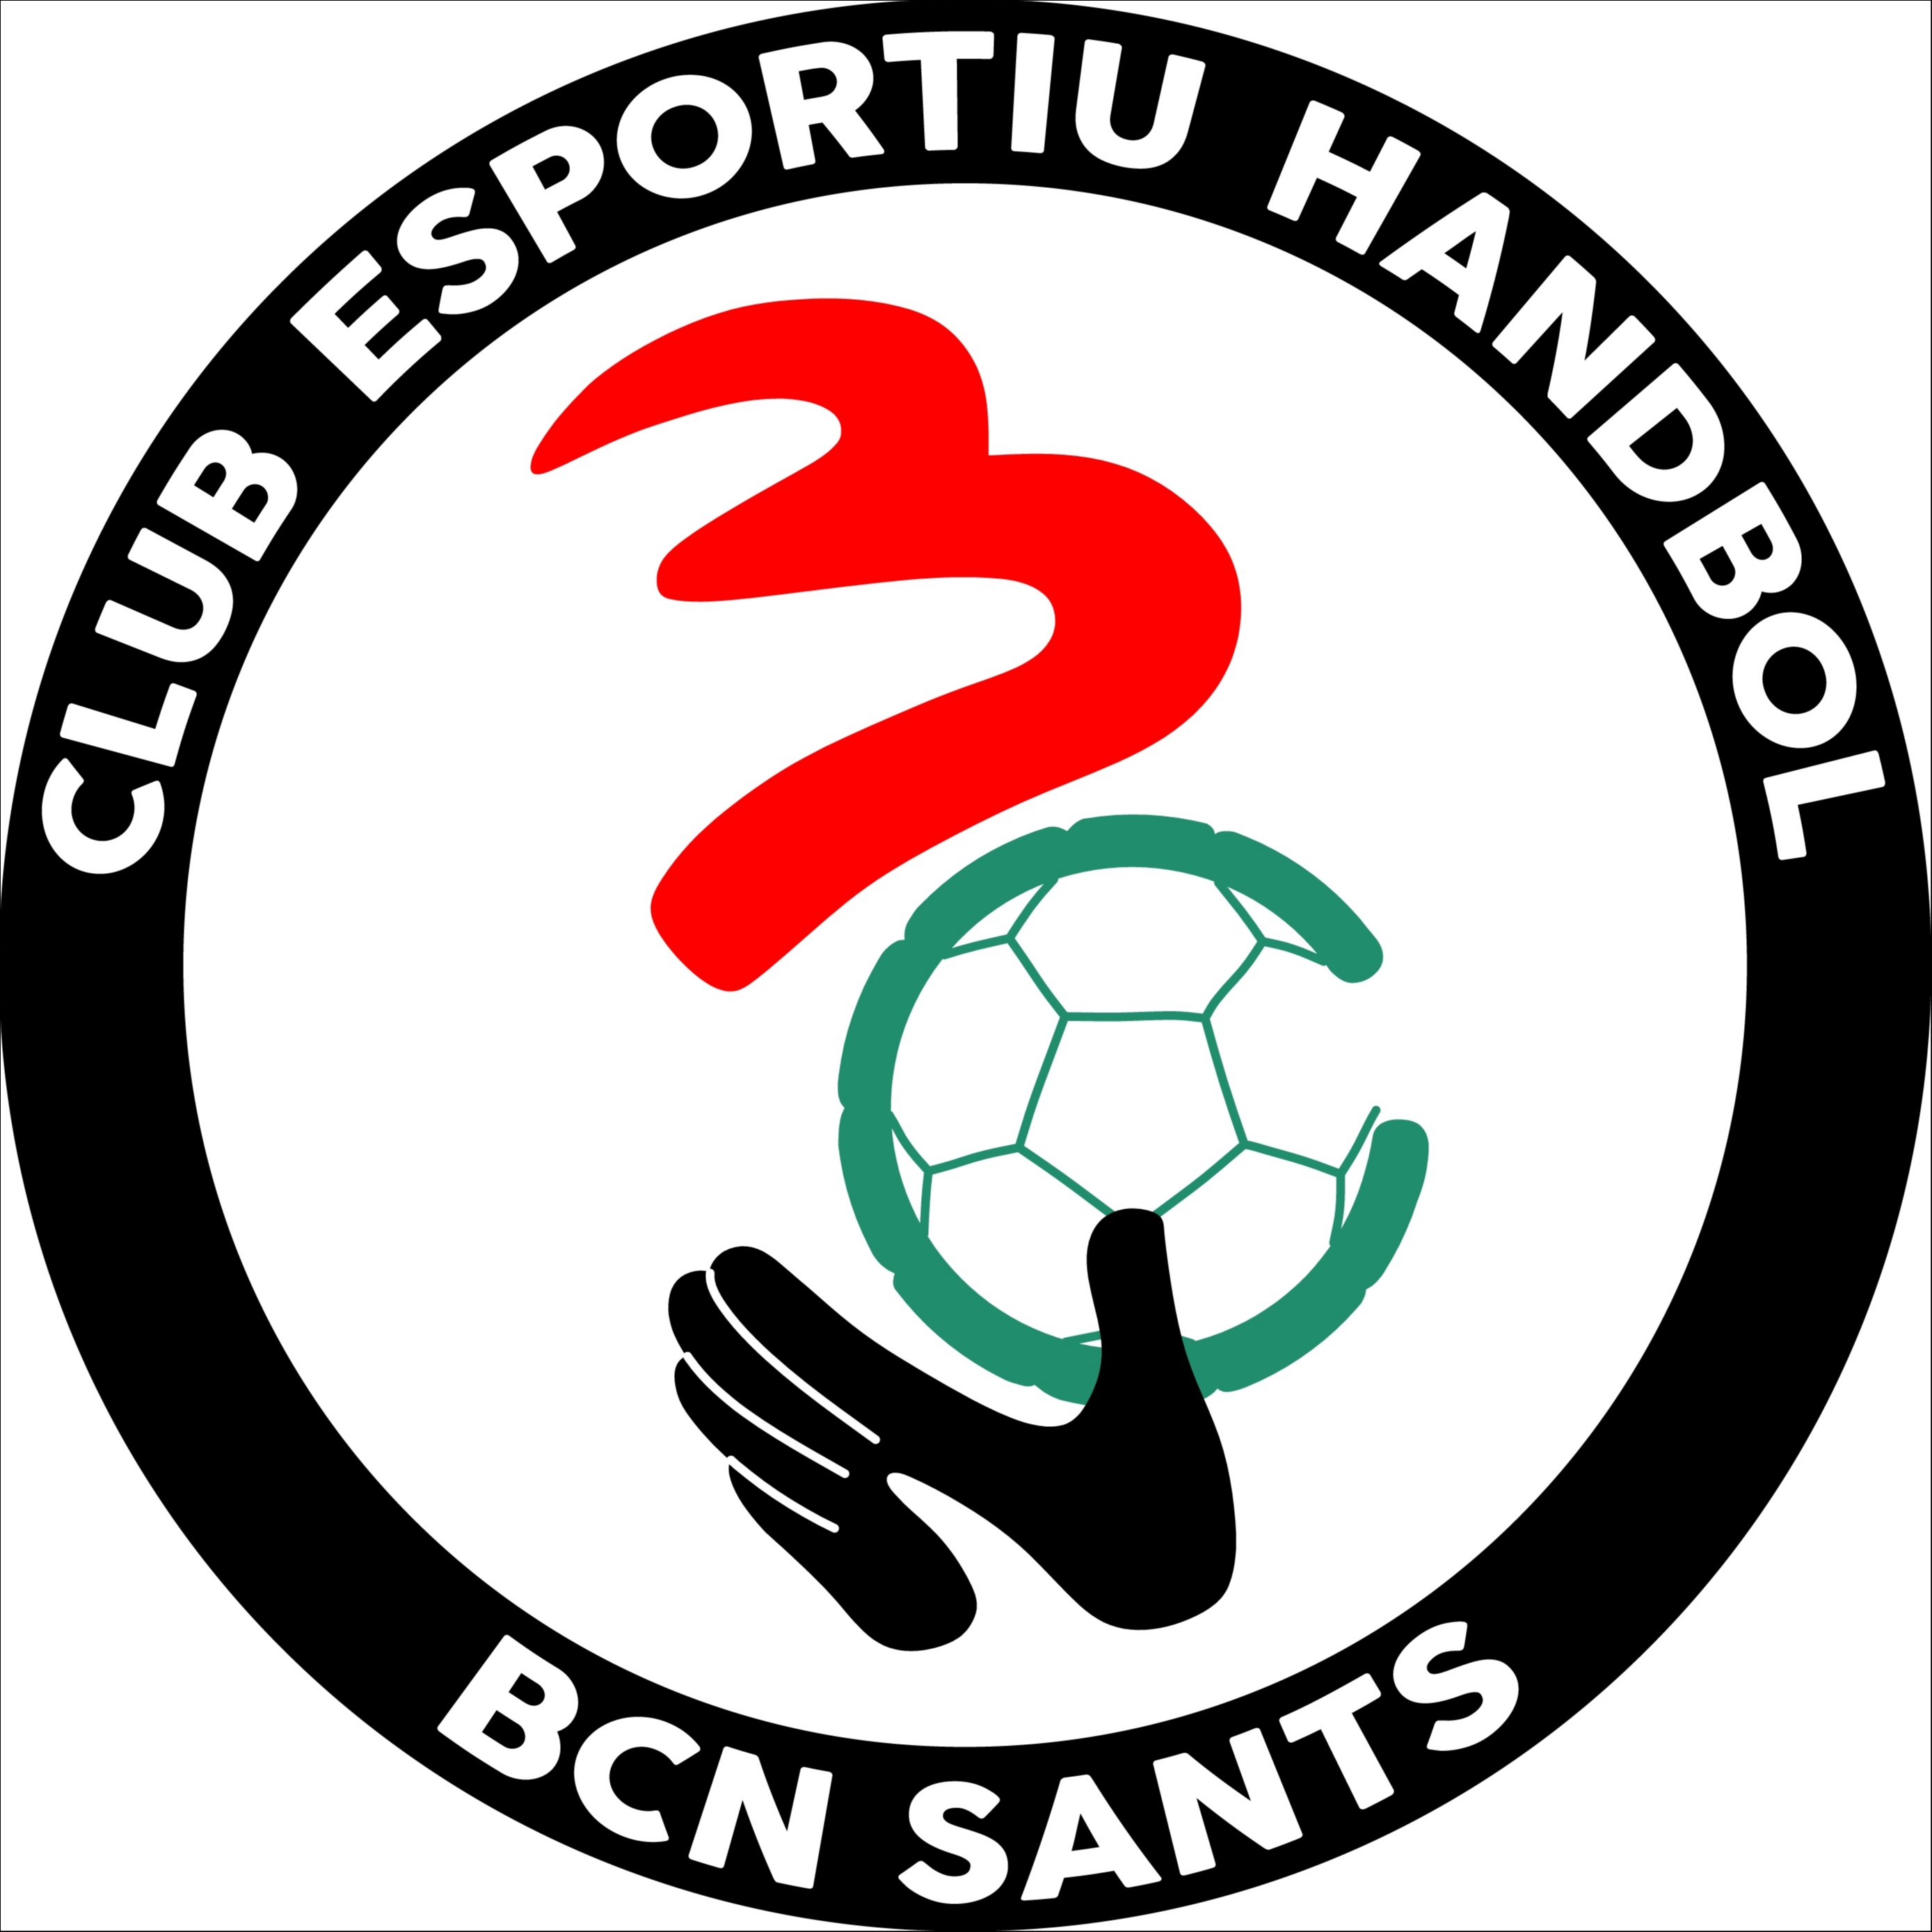 CLUB ESPORTIU HANDBOL BCN SANTS